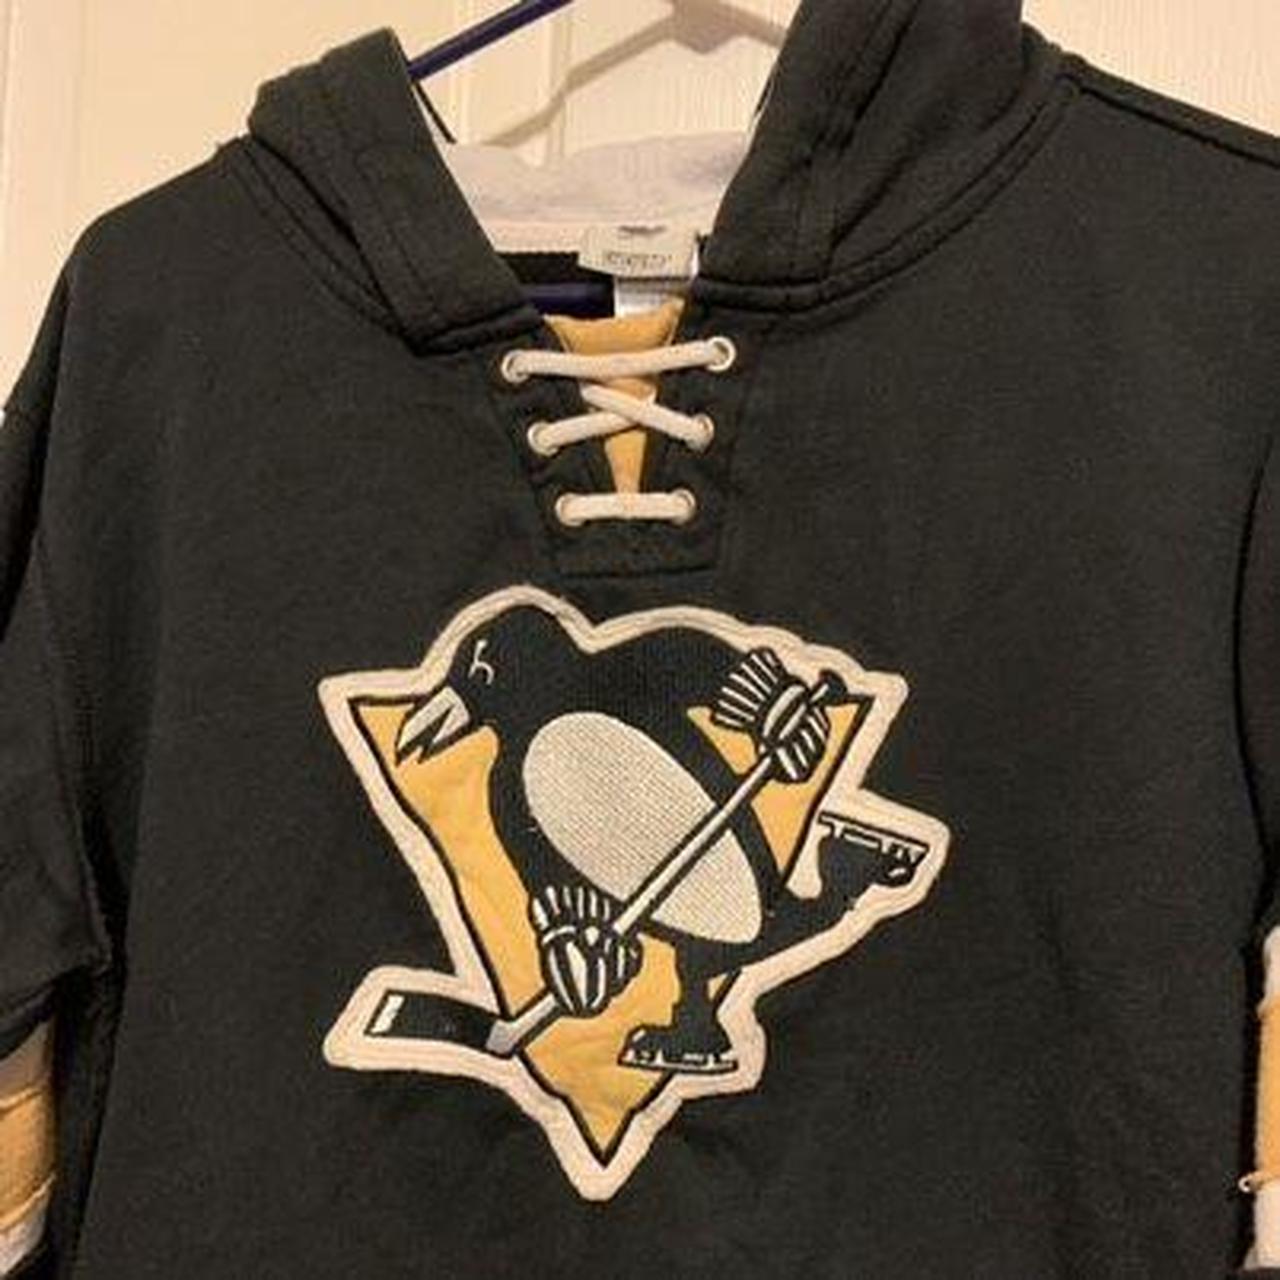 NHL Pittsburgh Penguins Hooded Sweatshirt New Youth LARGE (14/16)